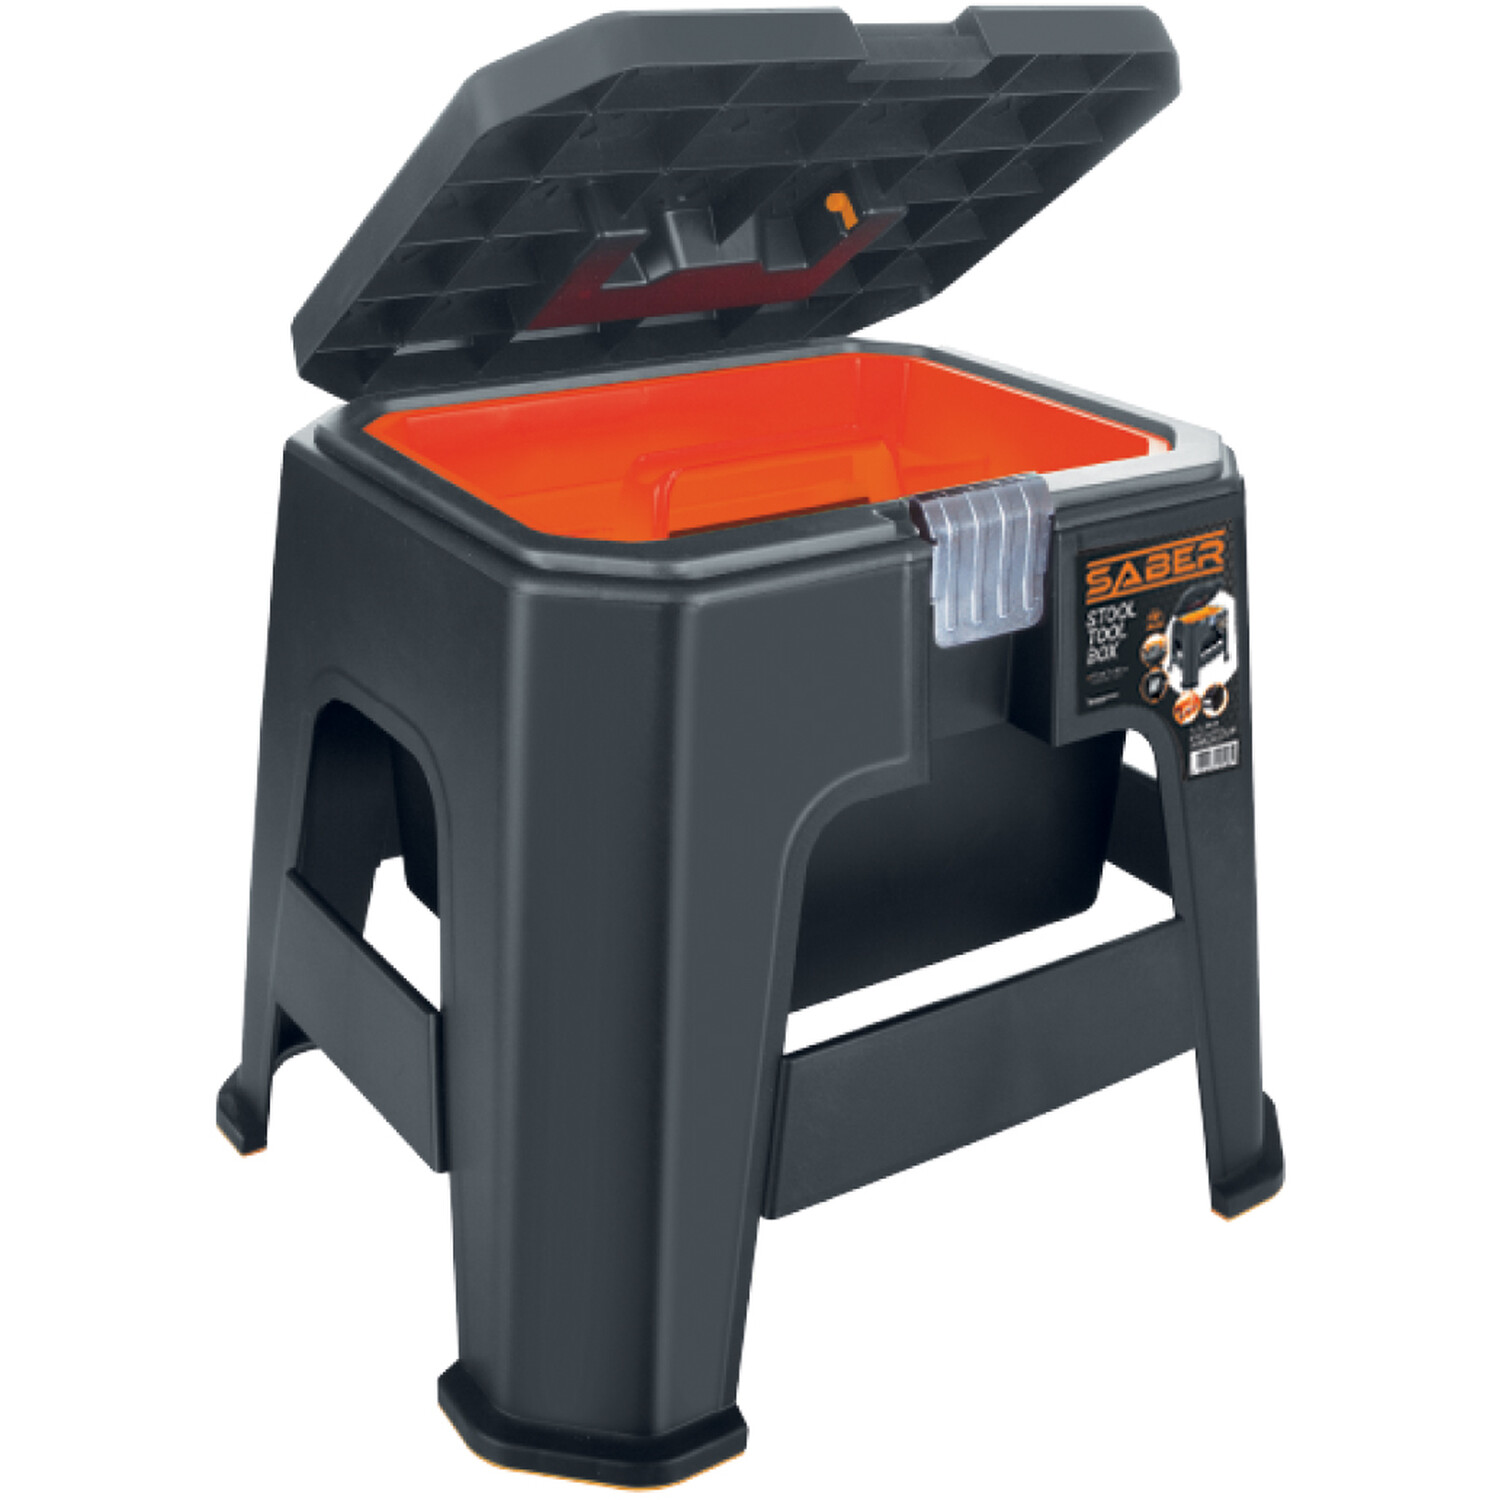 Saber Black and Orange Stool Tool Box Image 2